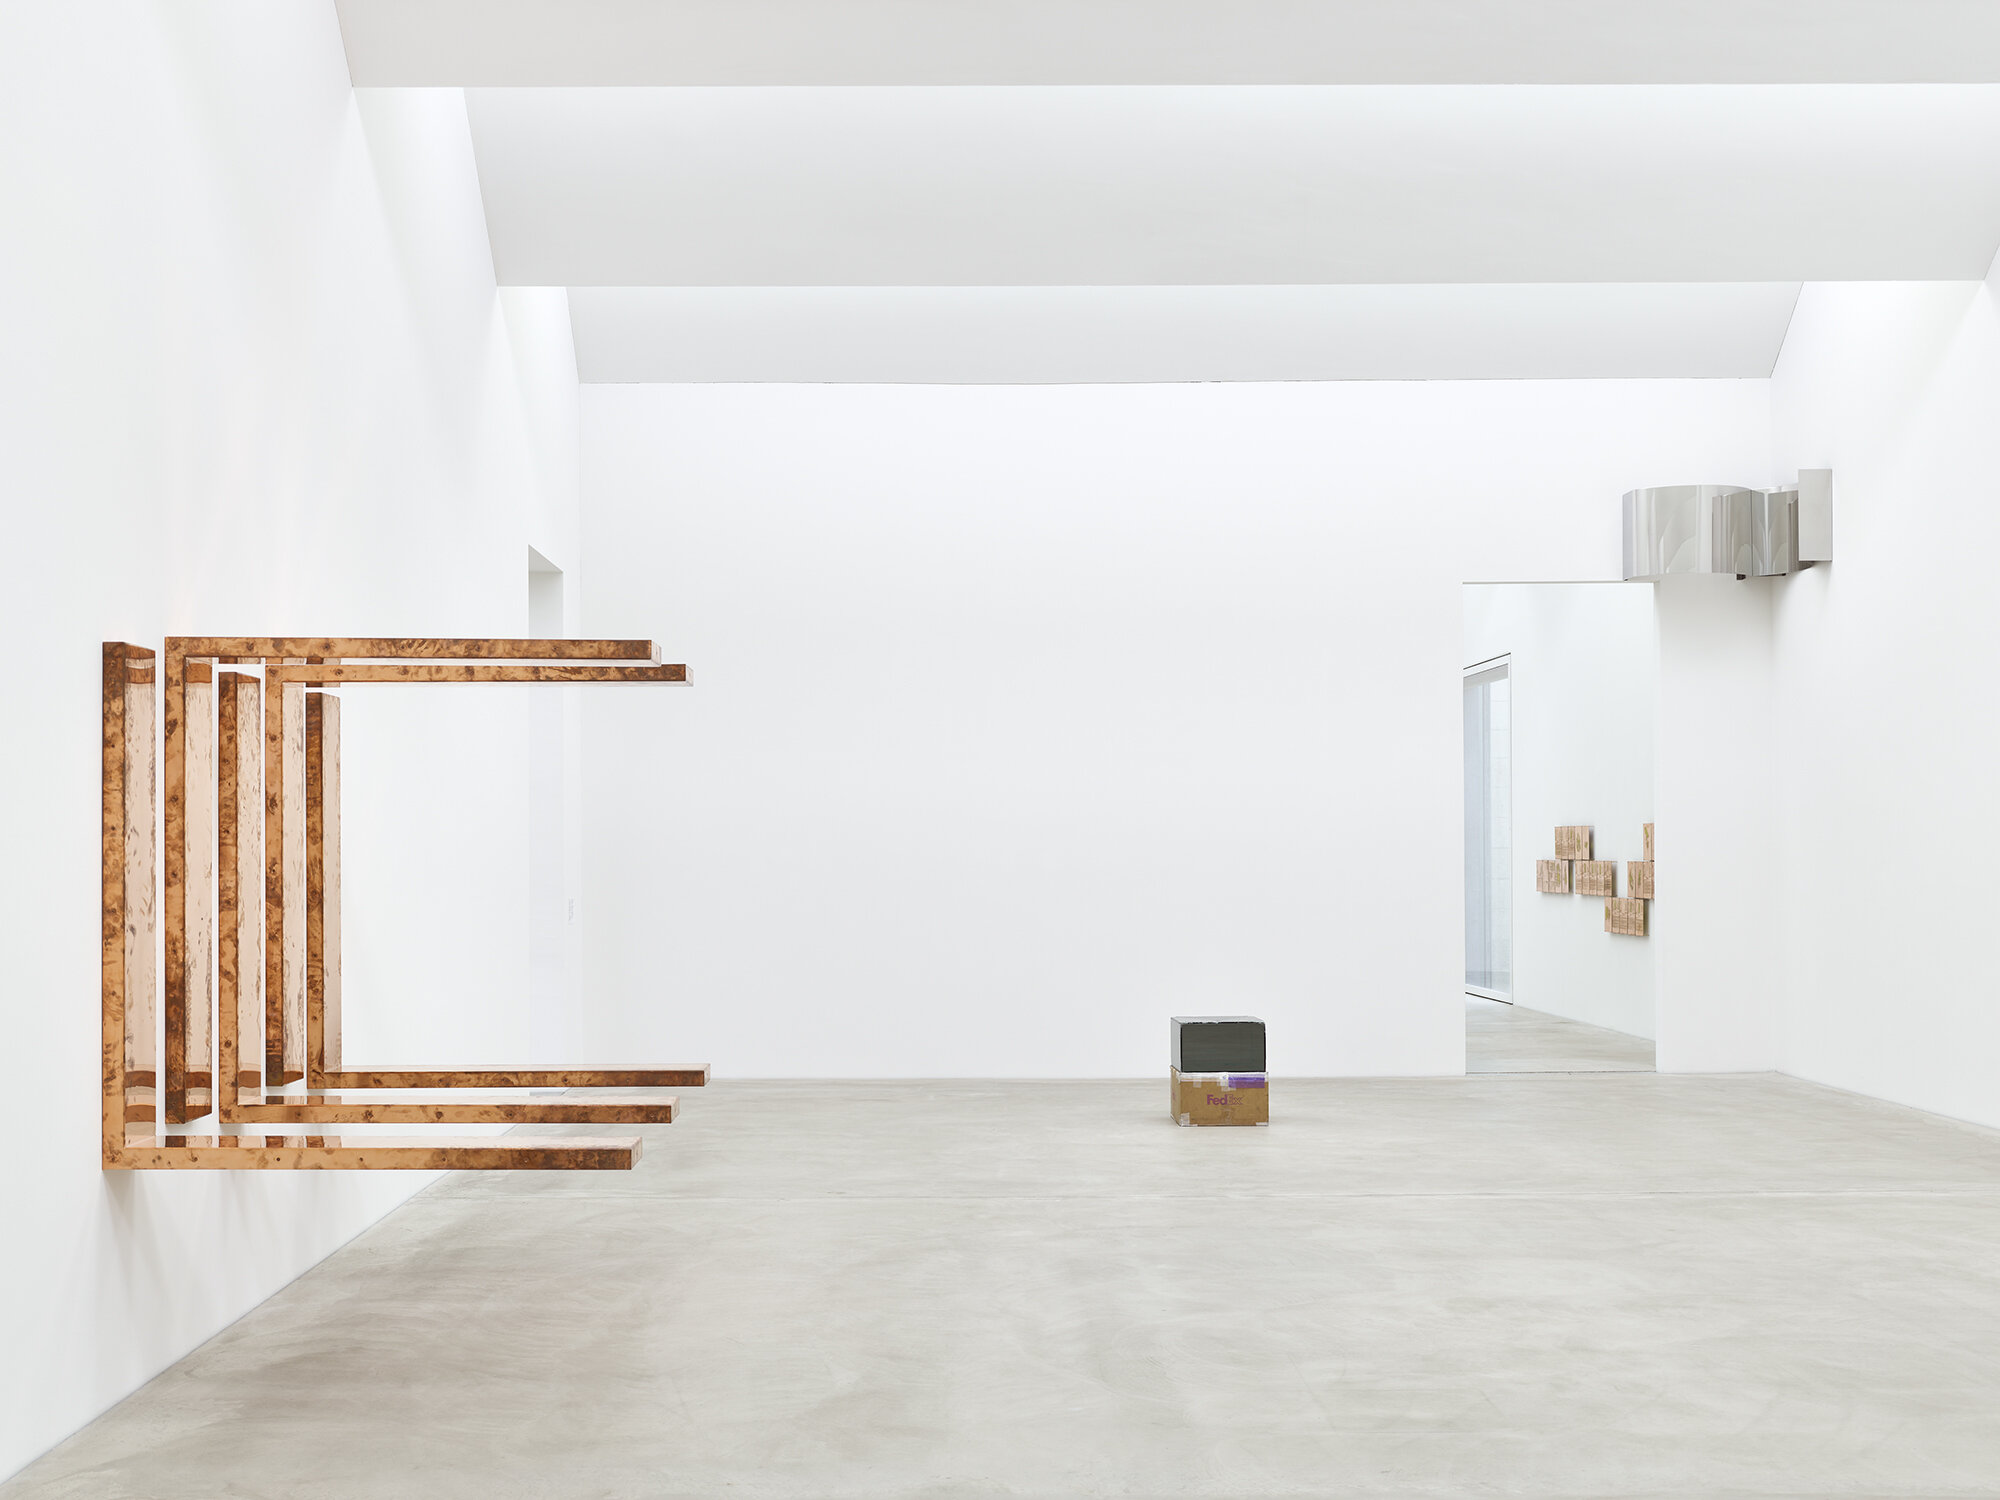   Standard Deviations   Kunst Museum Winterthur, Switzerland  2020 